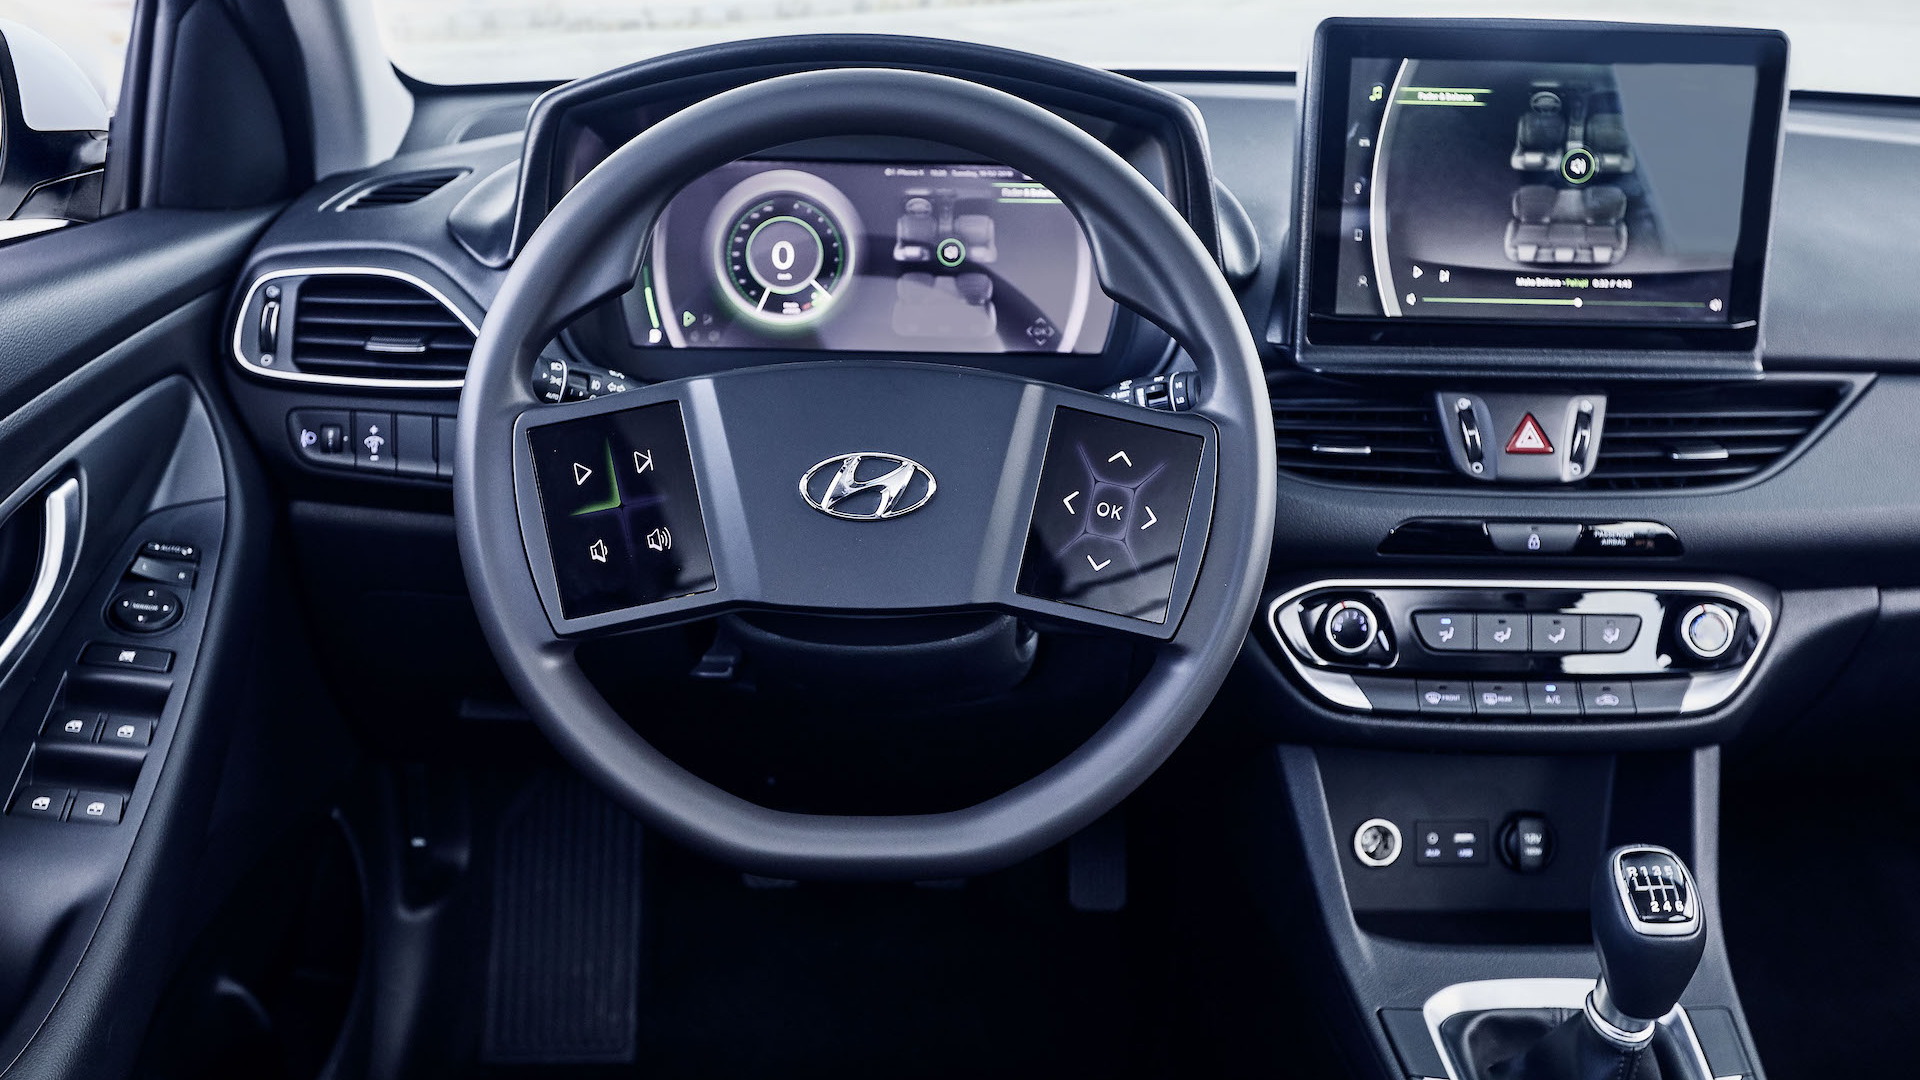 Hyundai next-generation cockpit prototype